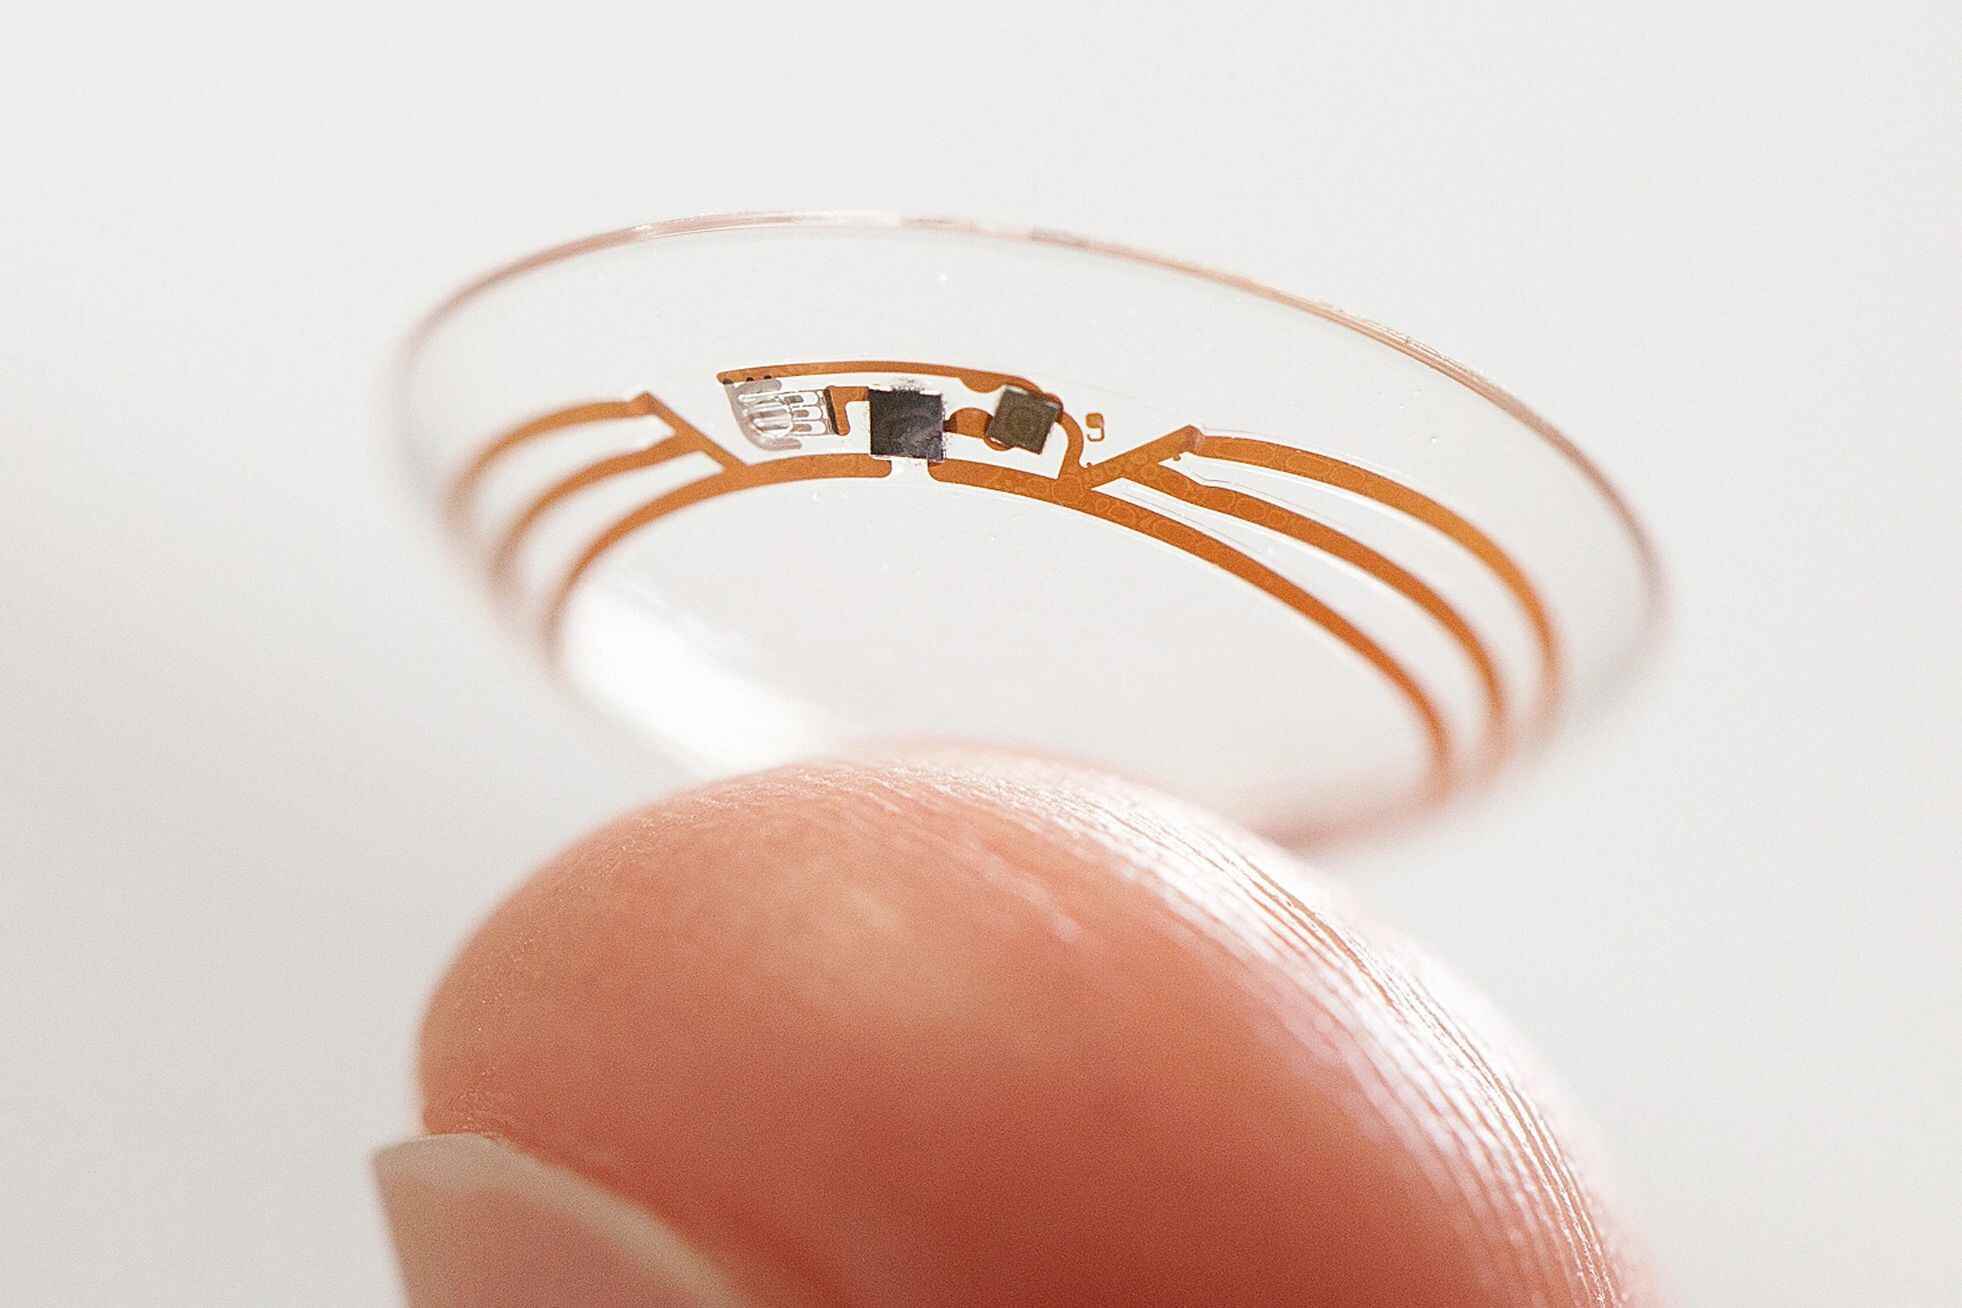 Akıllı kontakt lensler beklenenden daha erken gelebilir